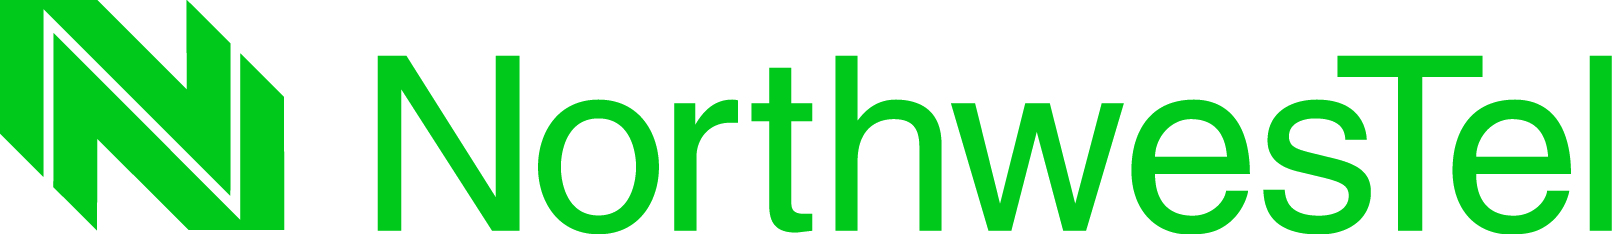 Northwestel logo